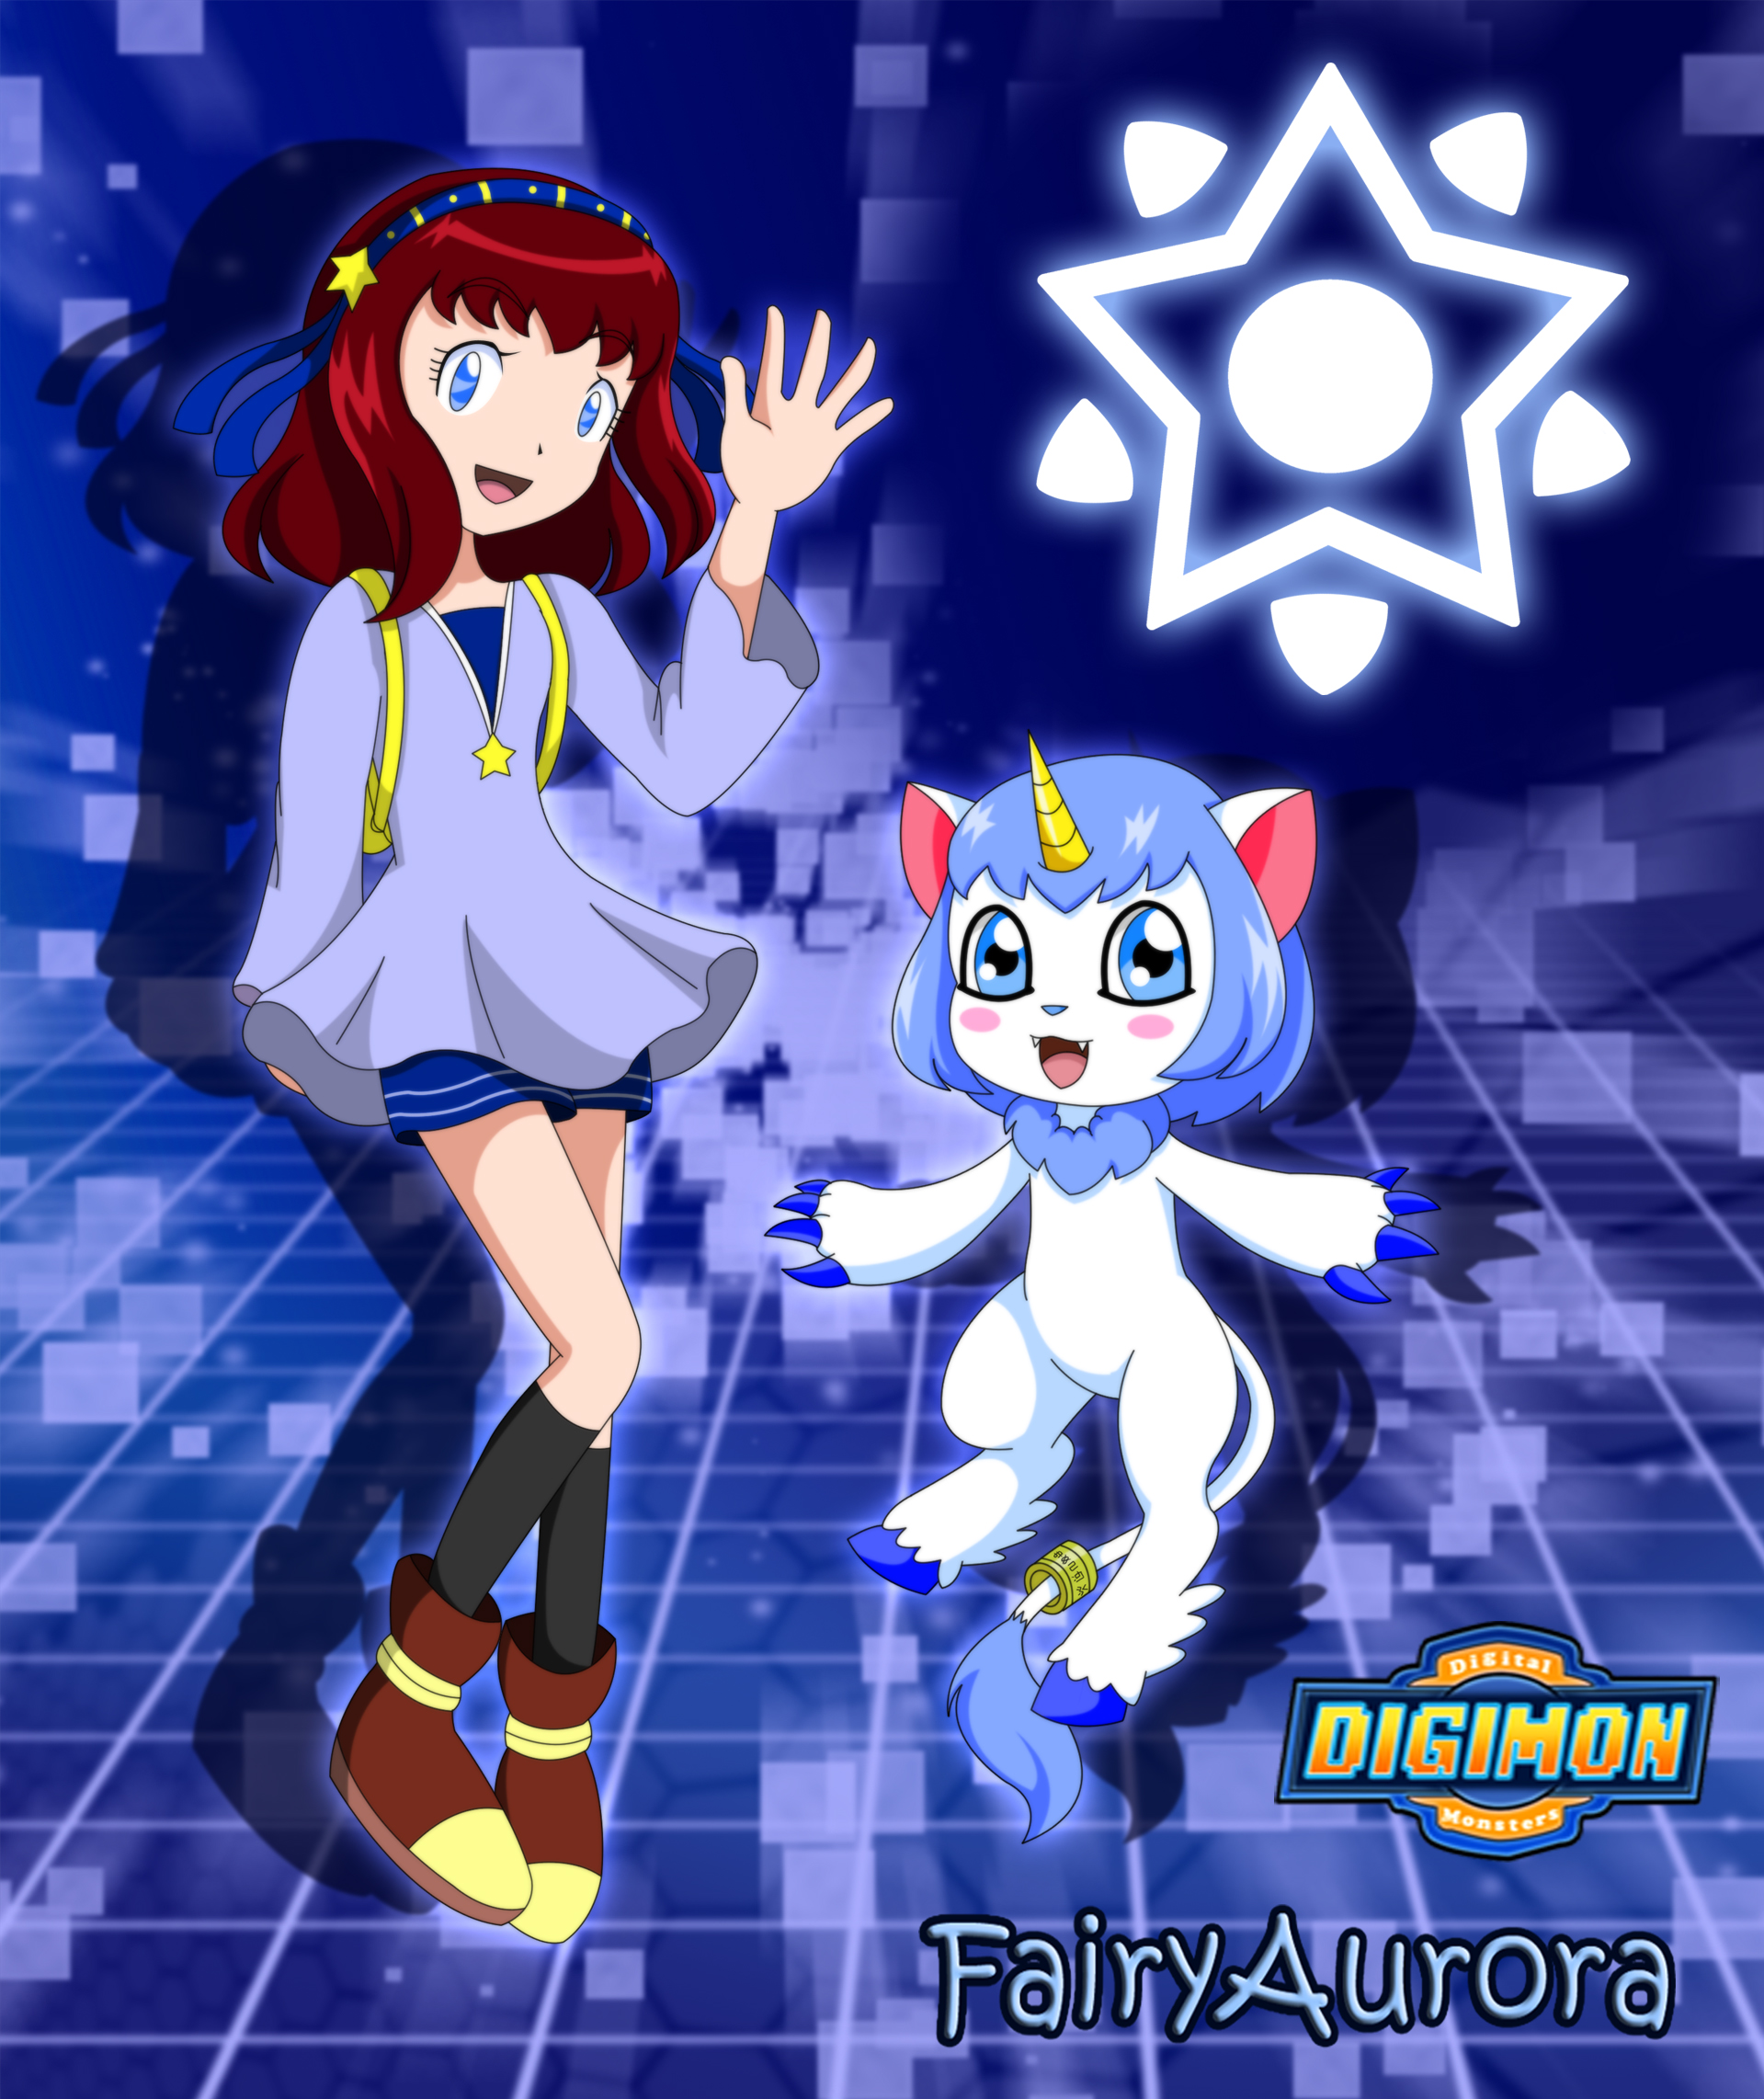 Digimon Tamers - Episódios - Saikô Animes